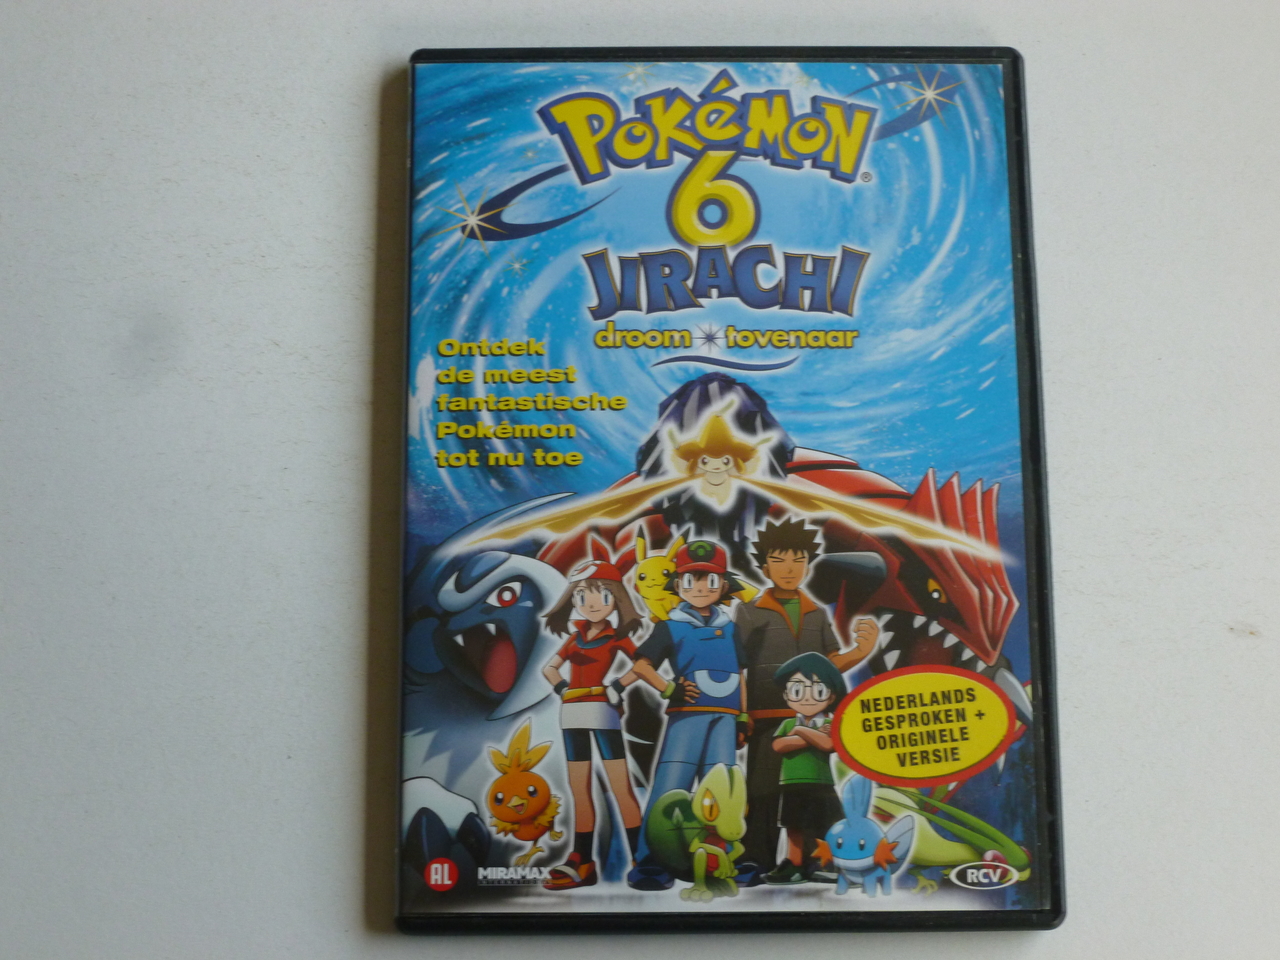 band Vader Mathis Pokemon 6 - Jirachi (DVD) - Tweedehands CD